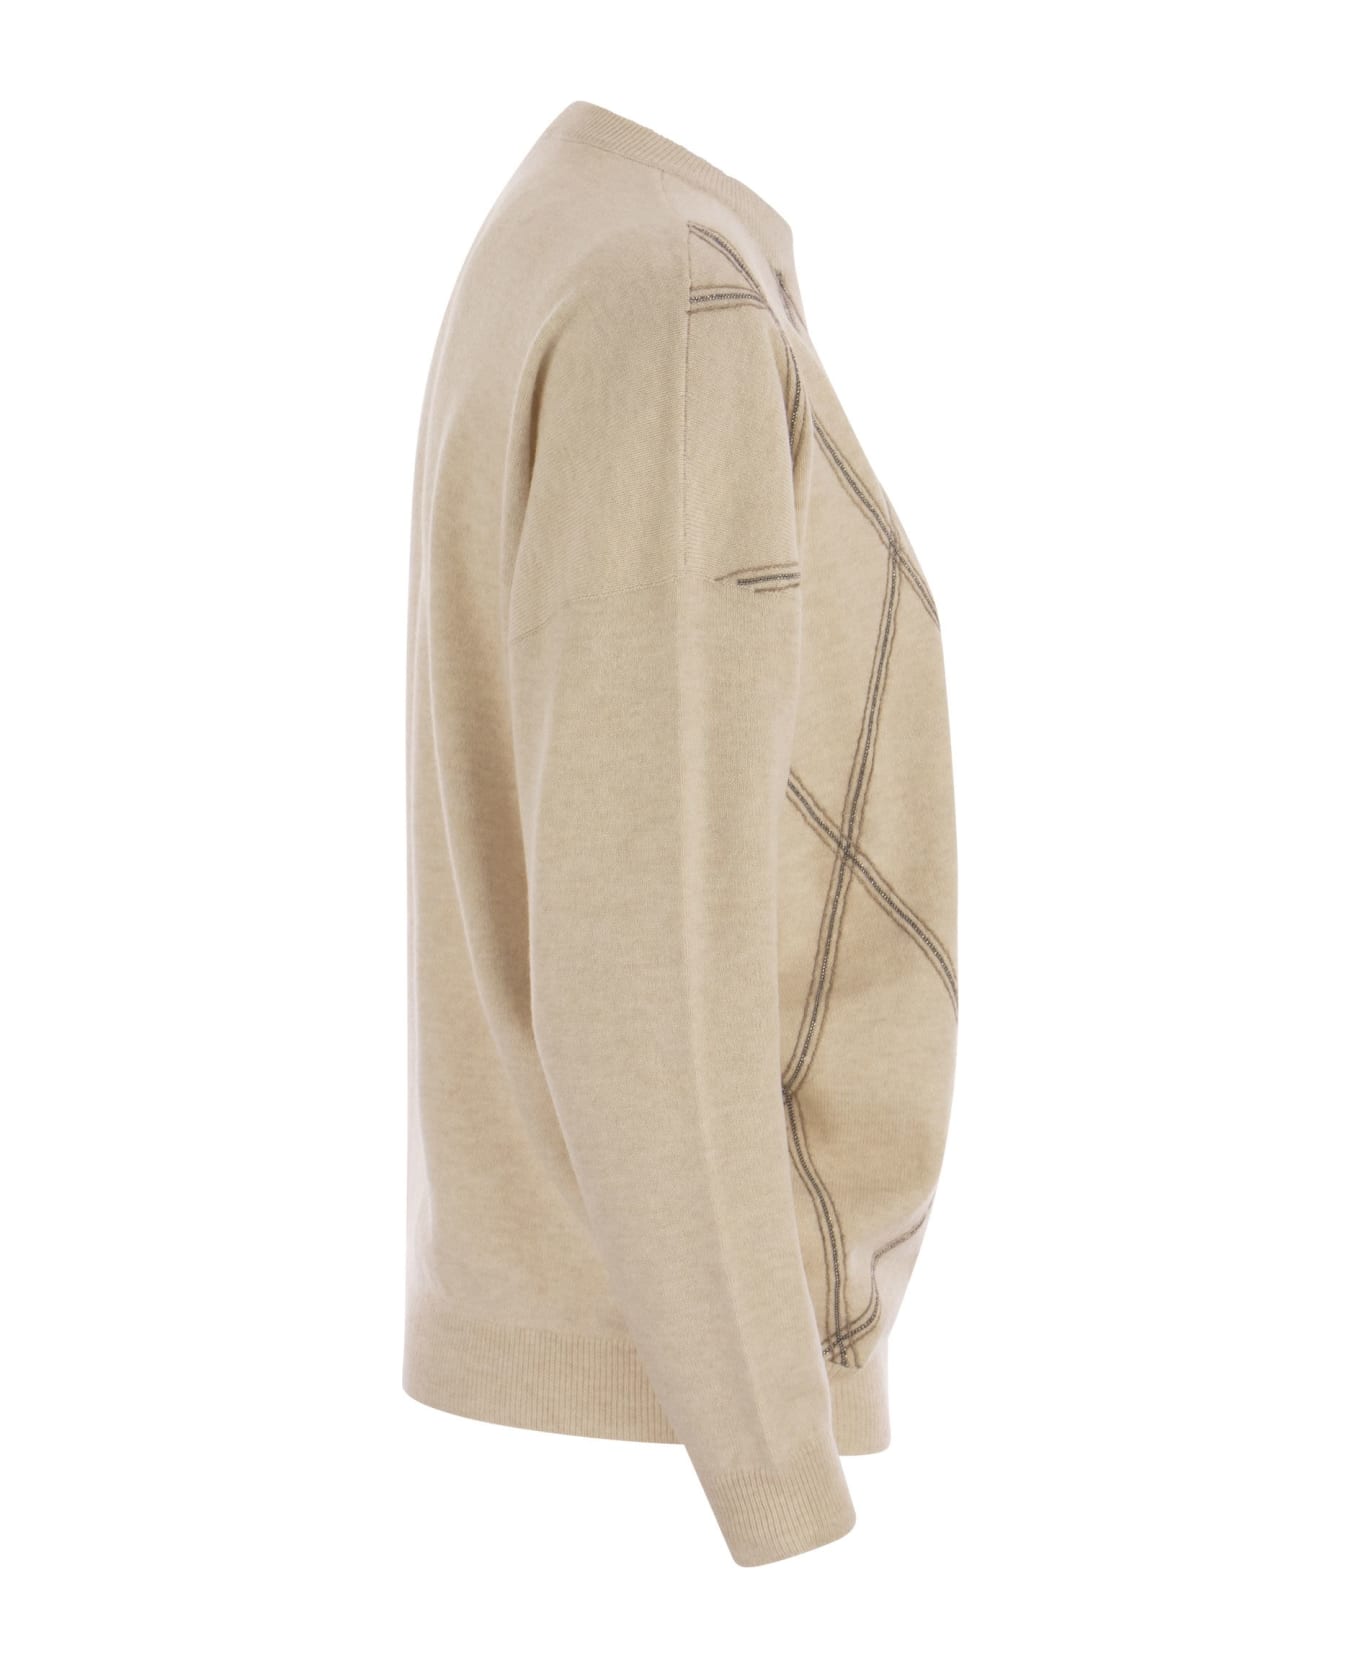 Brunello Cucinelli Crewneck Sweater In Fine Wool, Cashmere And Silk With Diamond Pattern - Sand